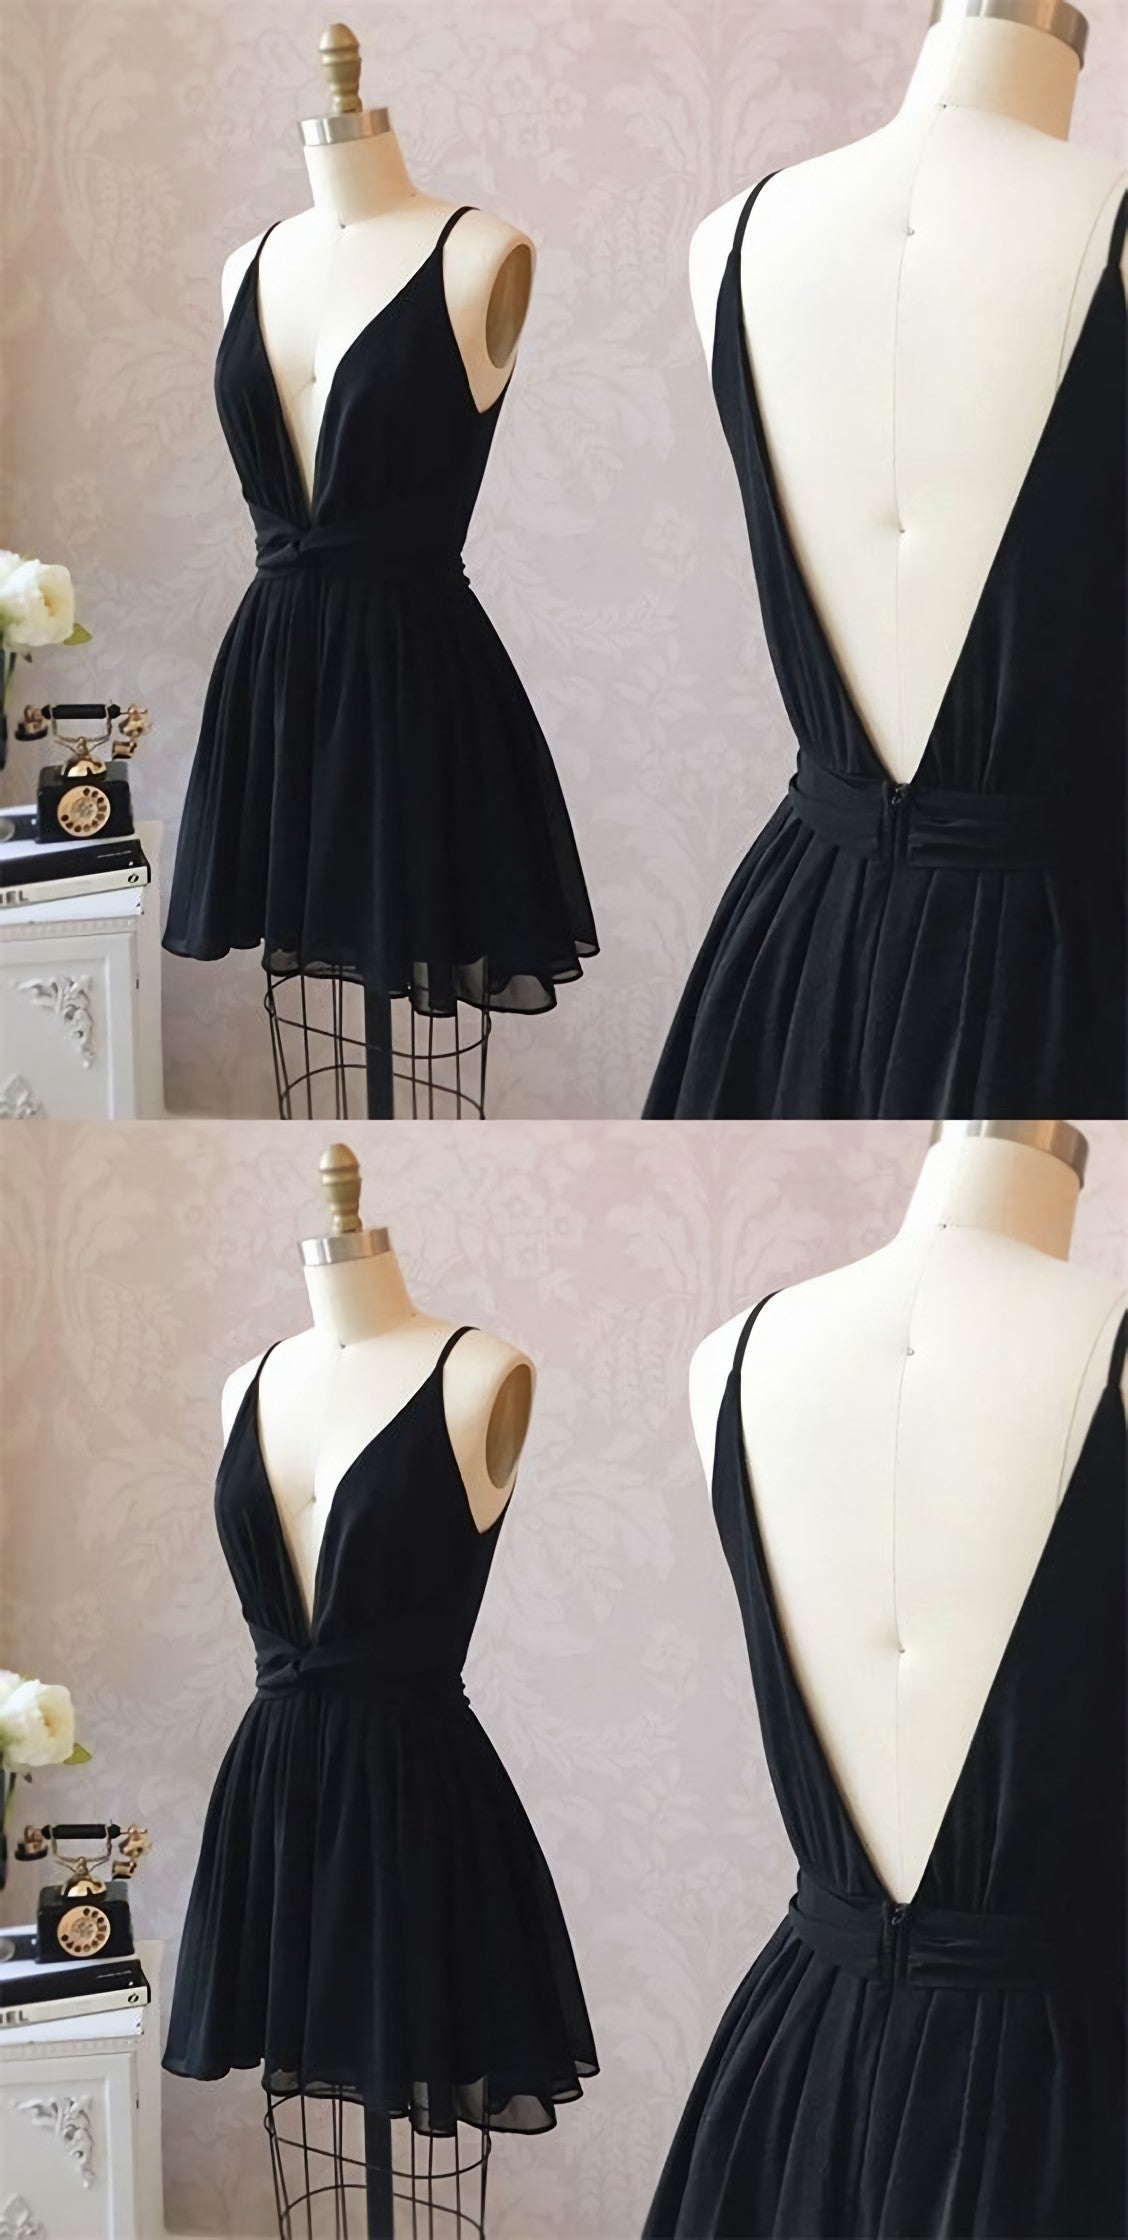 Cute Black V Neck Homecoming Dress, Short Black Formal Dress, Party Dress, 5950